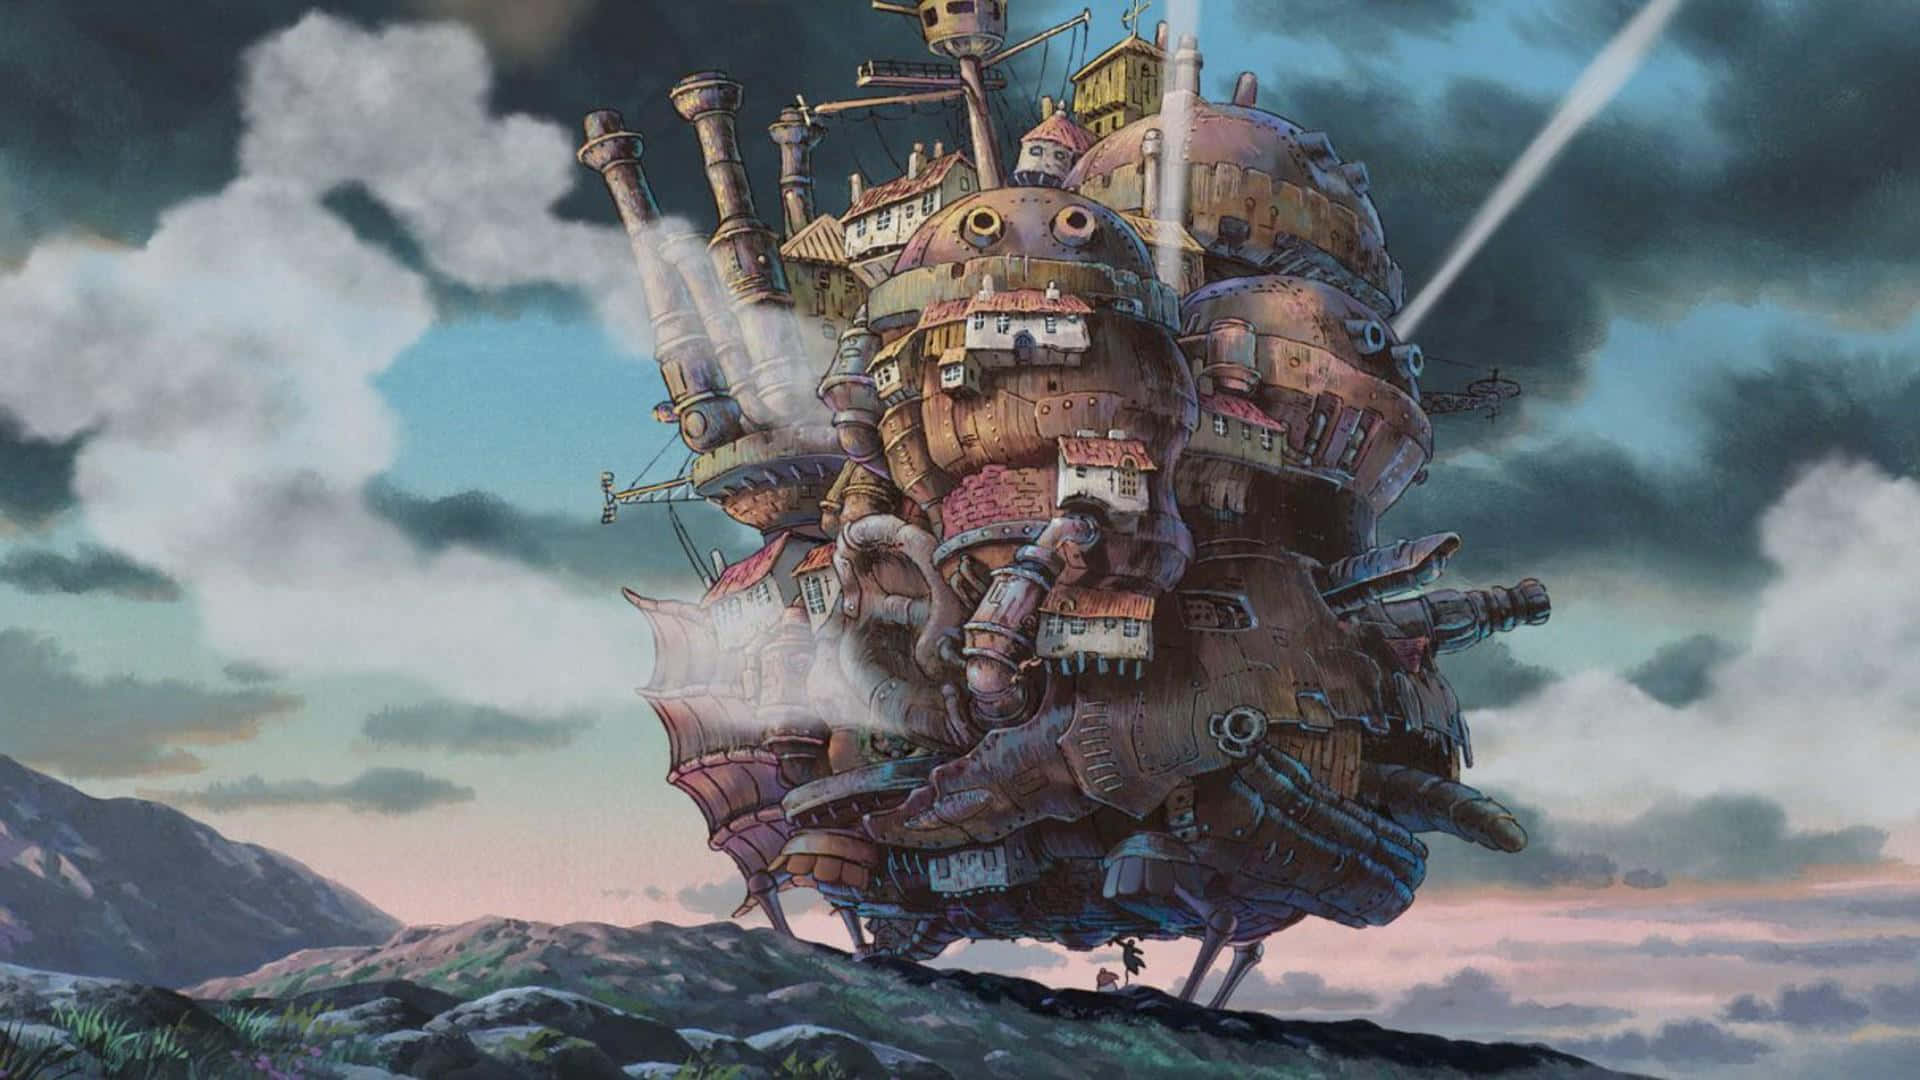 A dreamy landscape of Studio Ghibli awesomeness Wallpaper